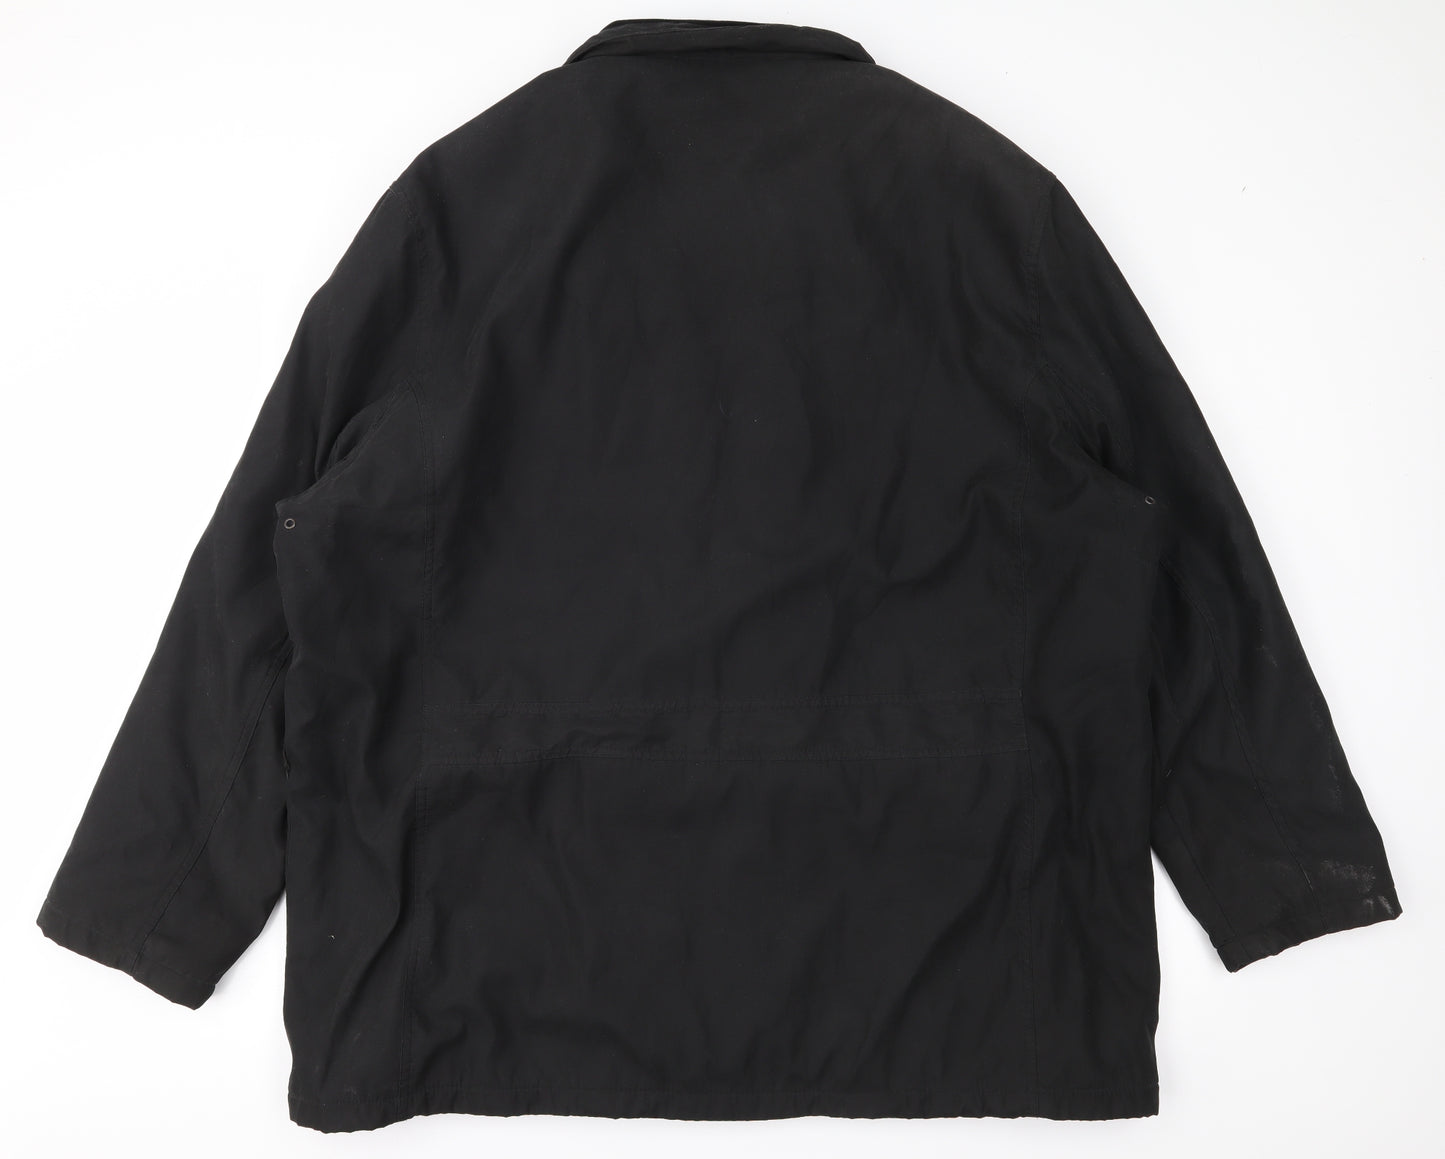 Paul Berman Mens Black   3-in-1 Jacket Coat Size 4XL